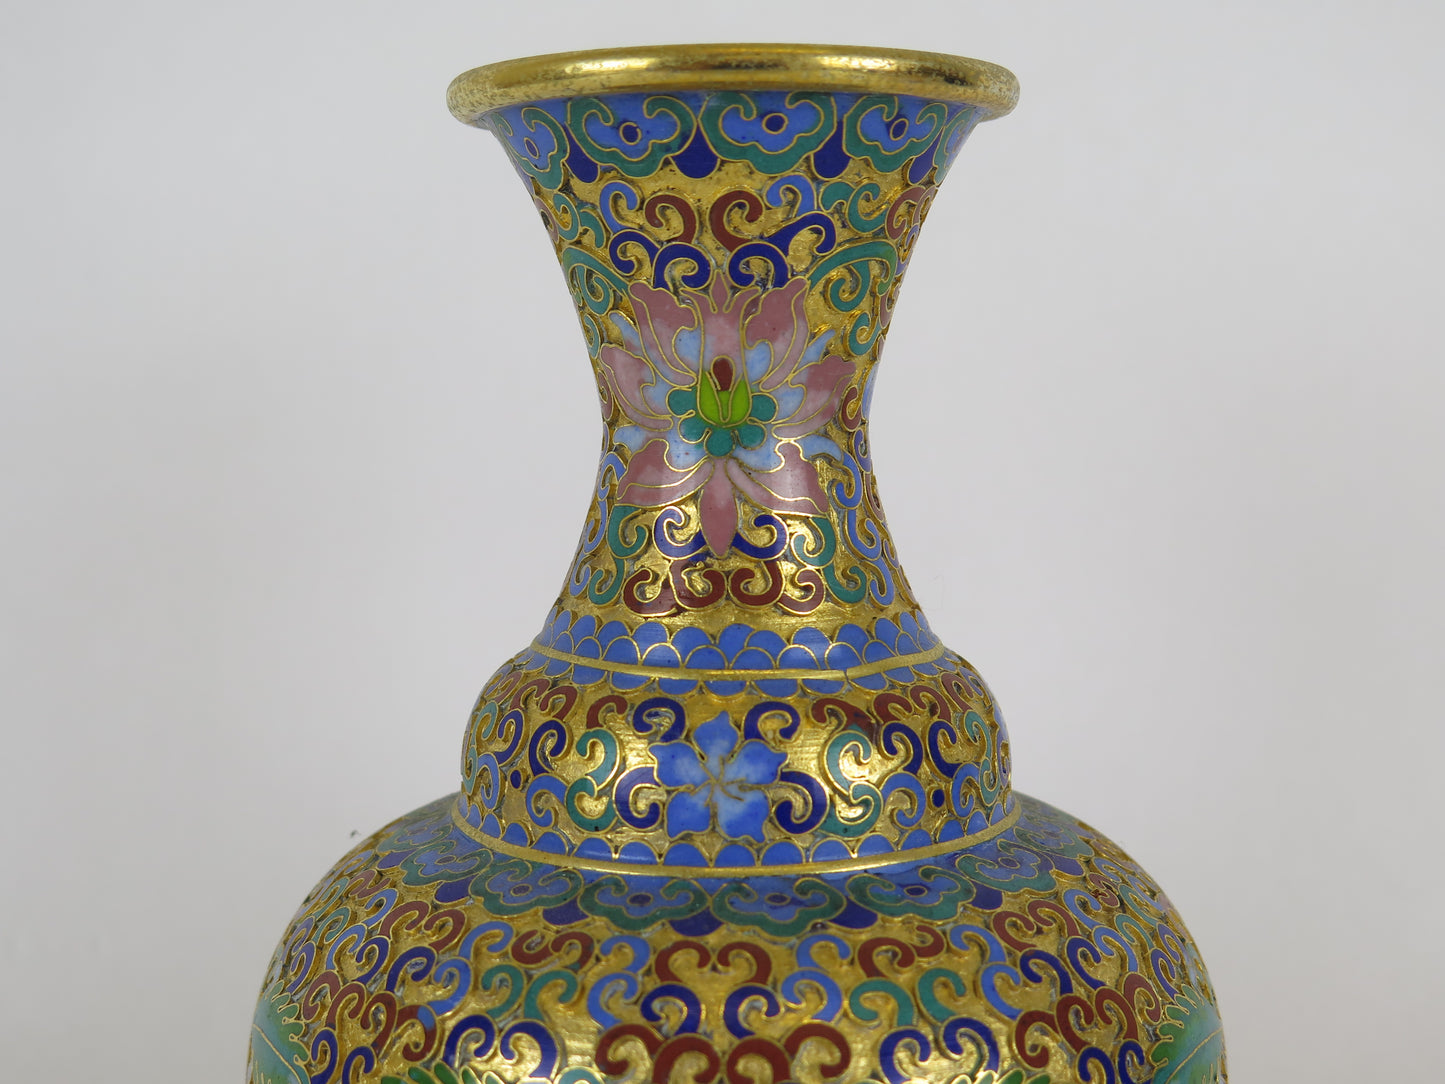 Vintage colorful cloisonné vase high quality Chinese crafts floral CM4